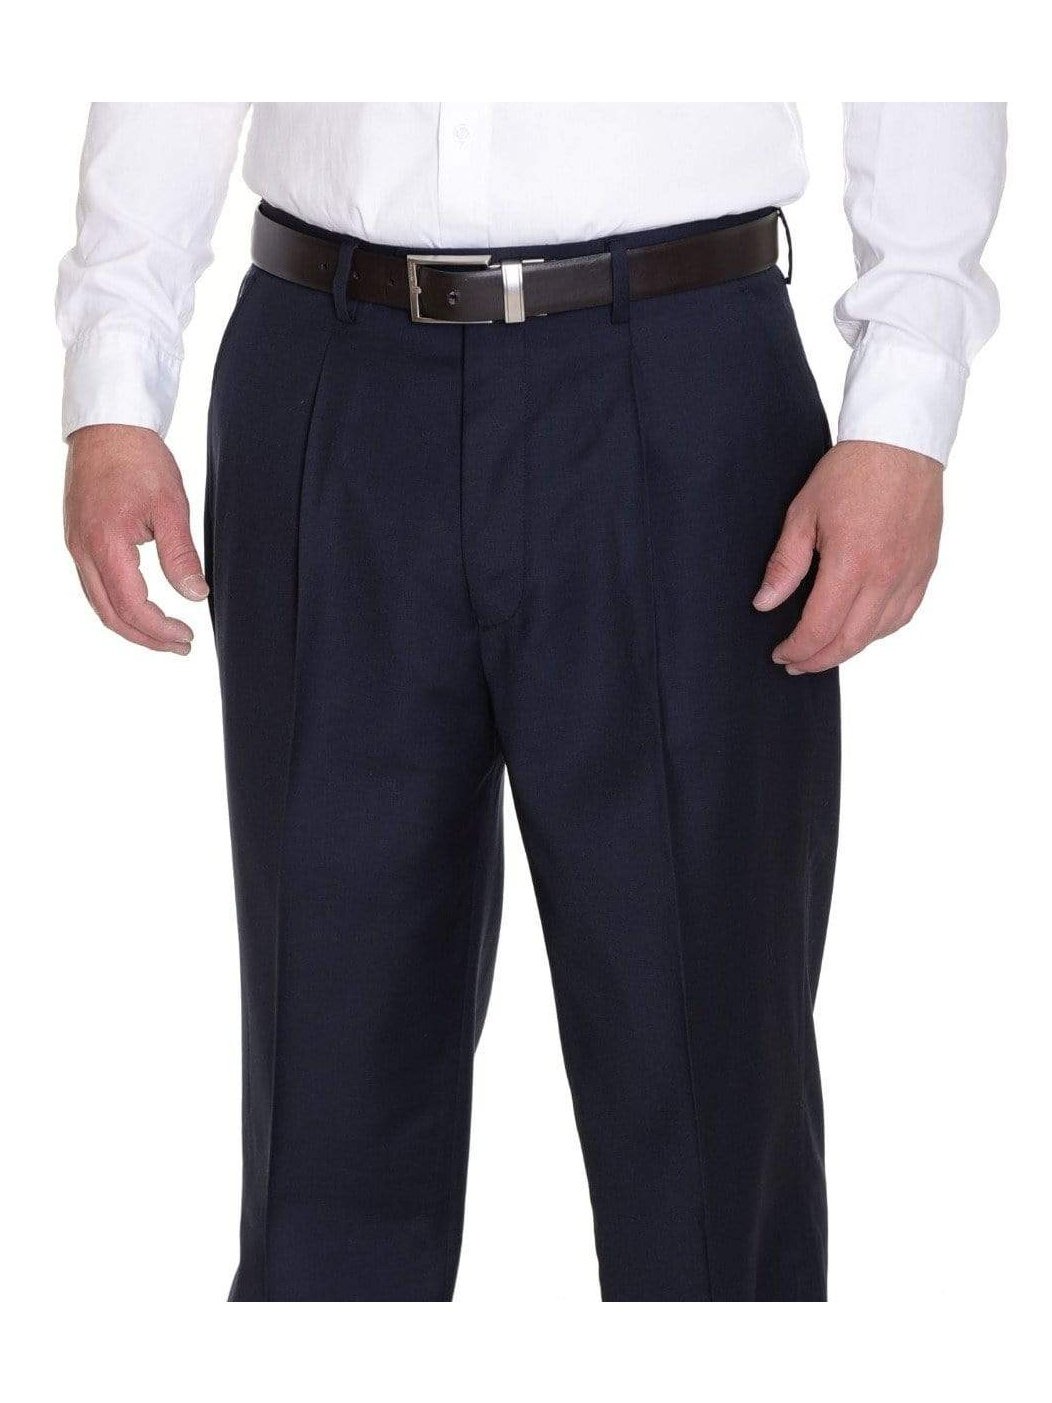 Label M PANTS 50W Solid Navy Blue Single Pleated Wrinkle Resistant Wool Dress Pants